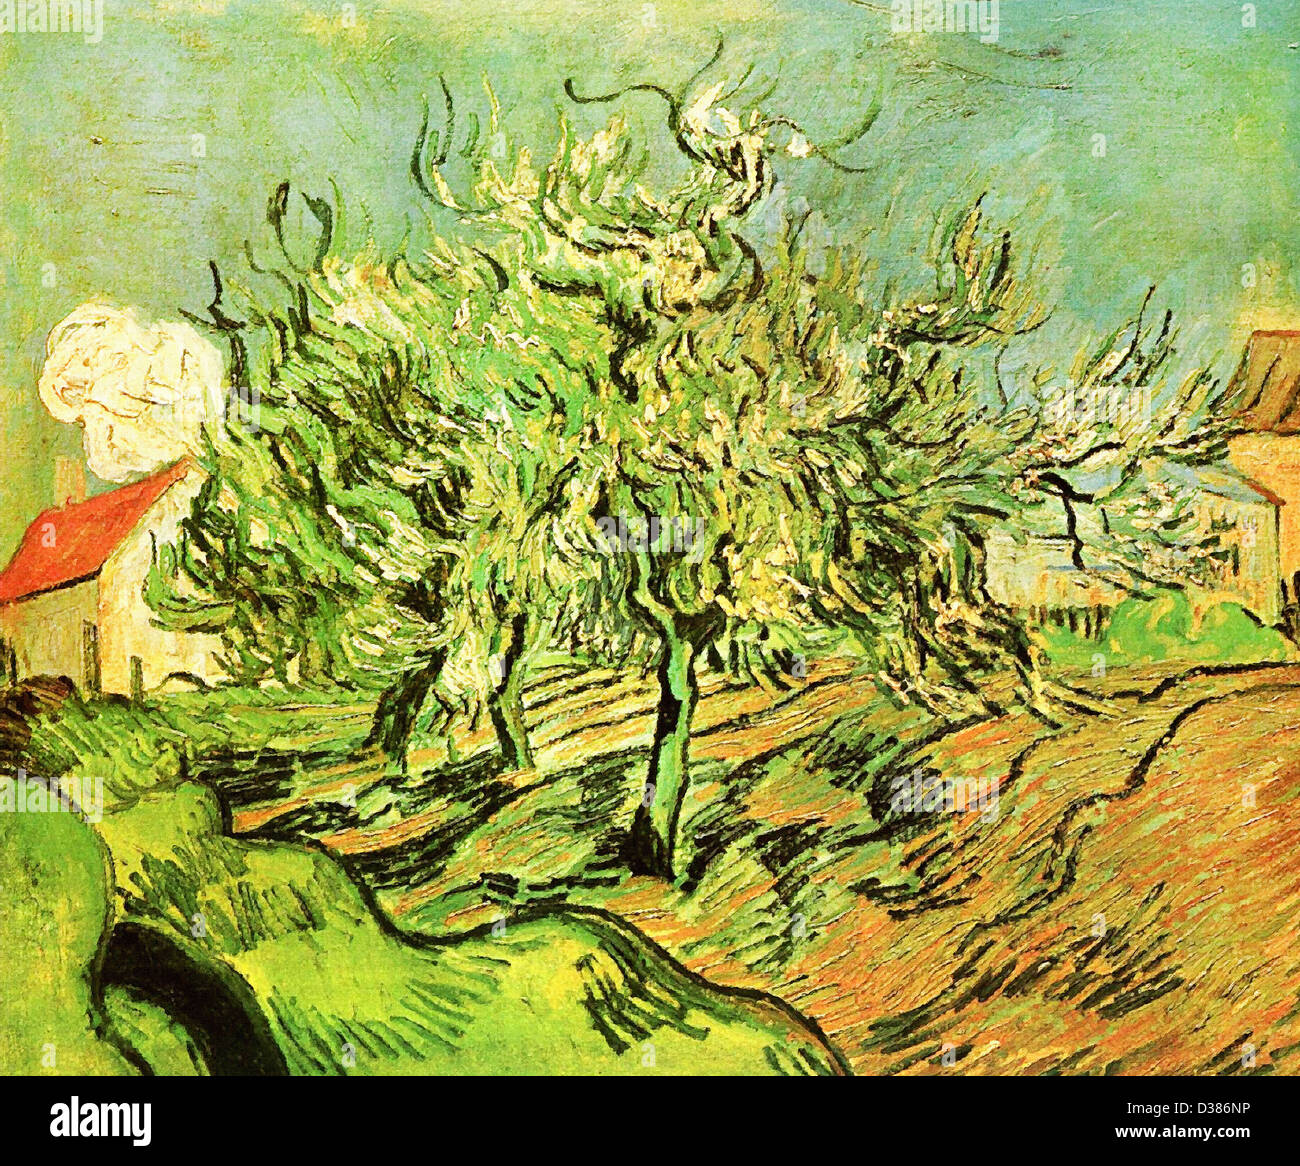 Vincent van Gogh, paesaggio con tre alberi e una casa. 1890. Post-Impressionism. Olio su tela. Rijksmuseum Kröller-Müller Foto Stock